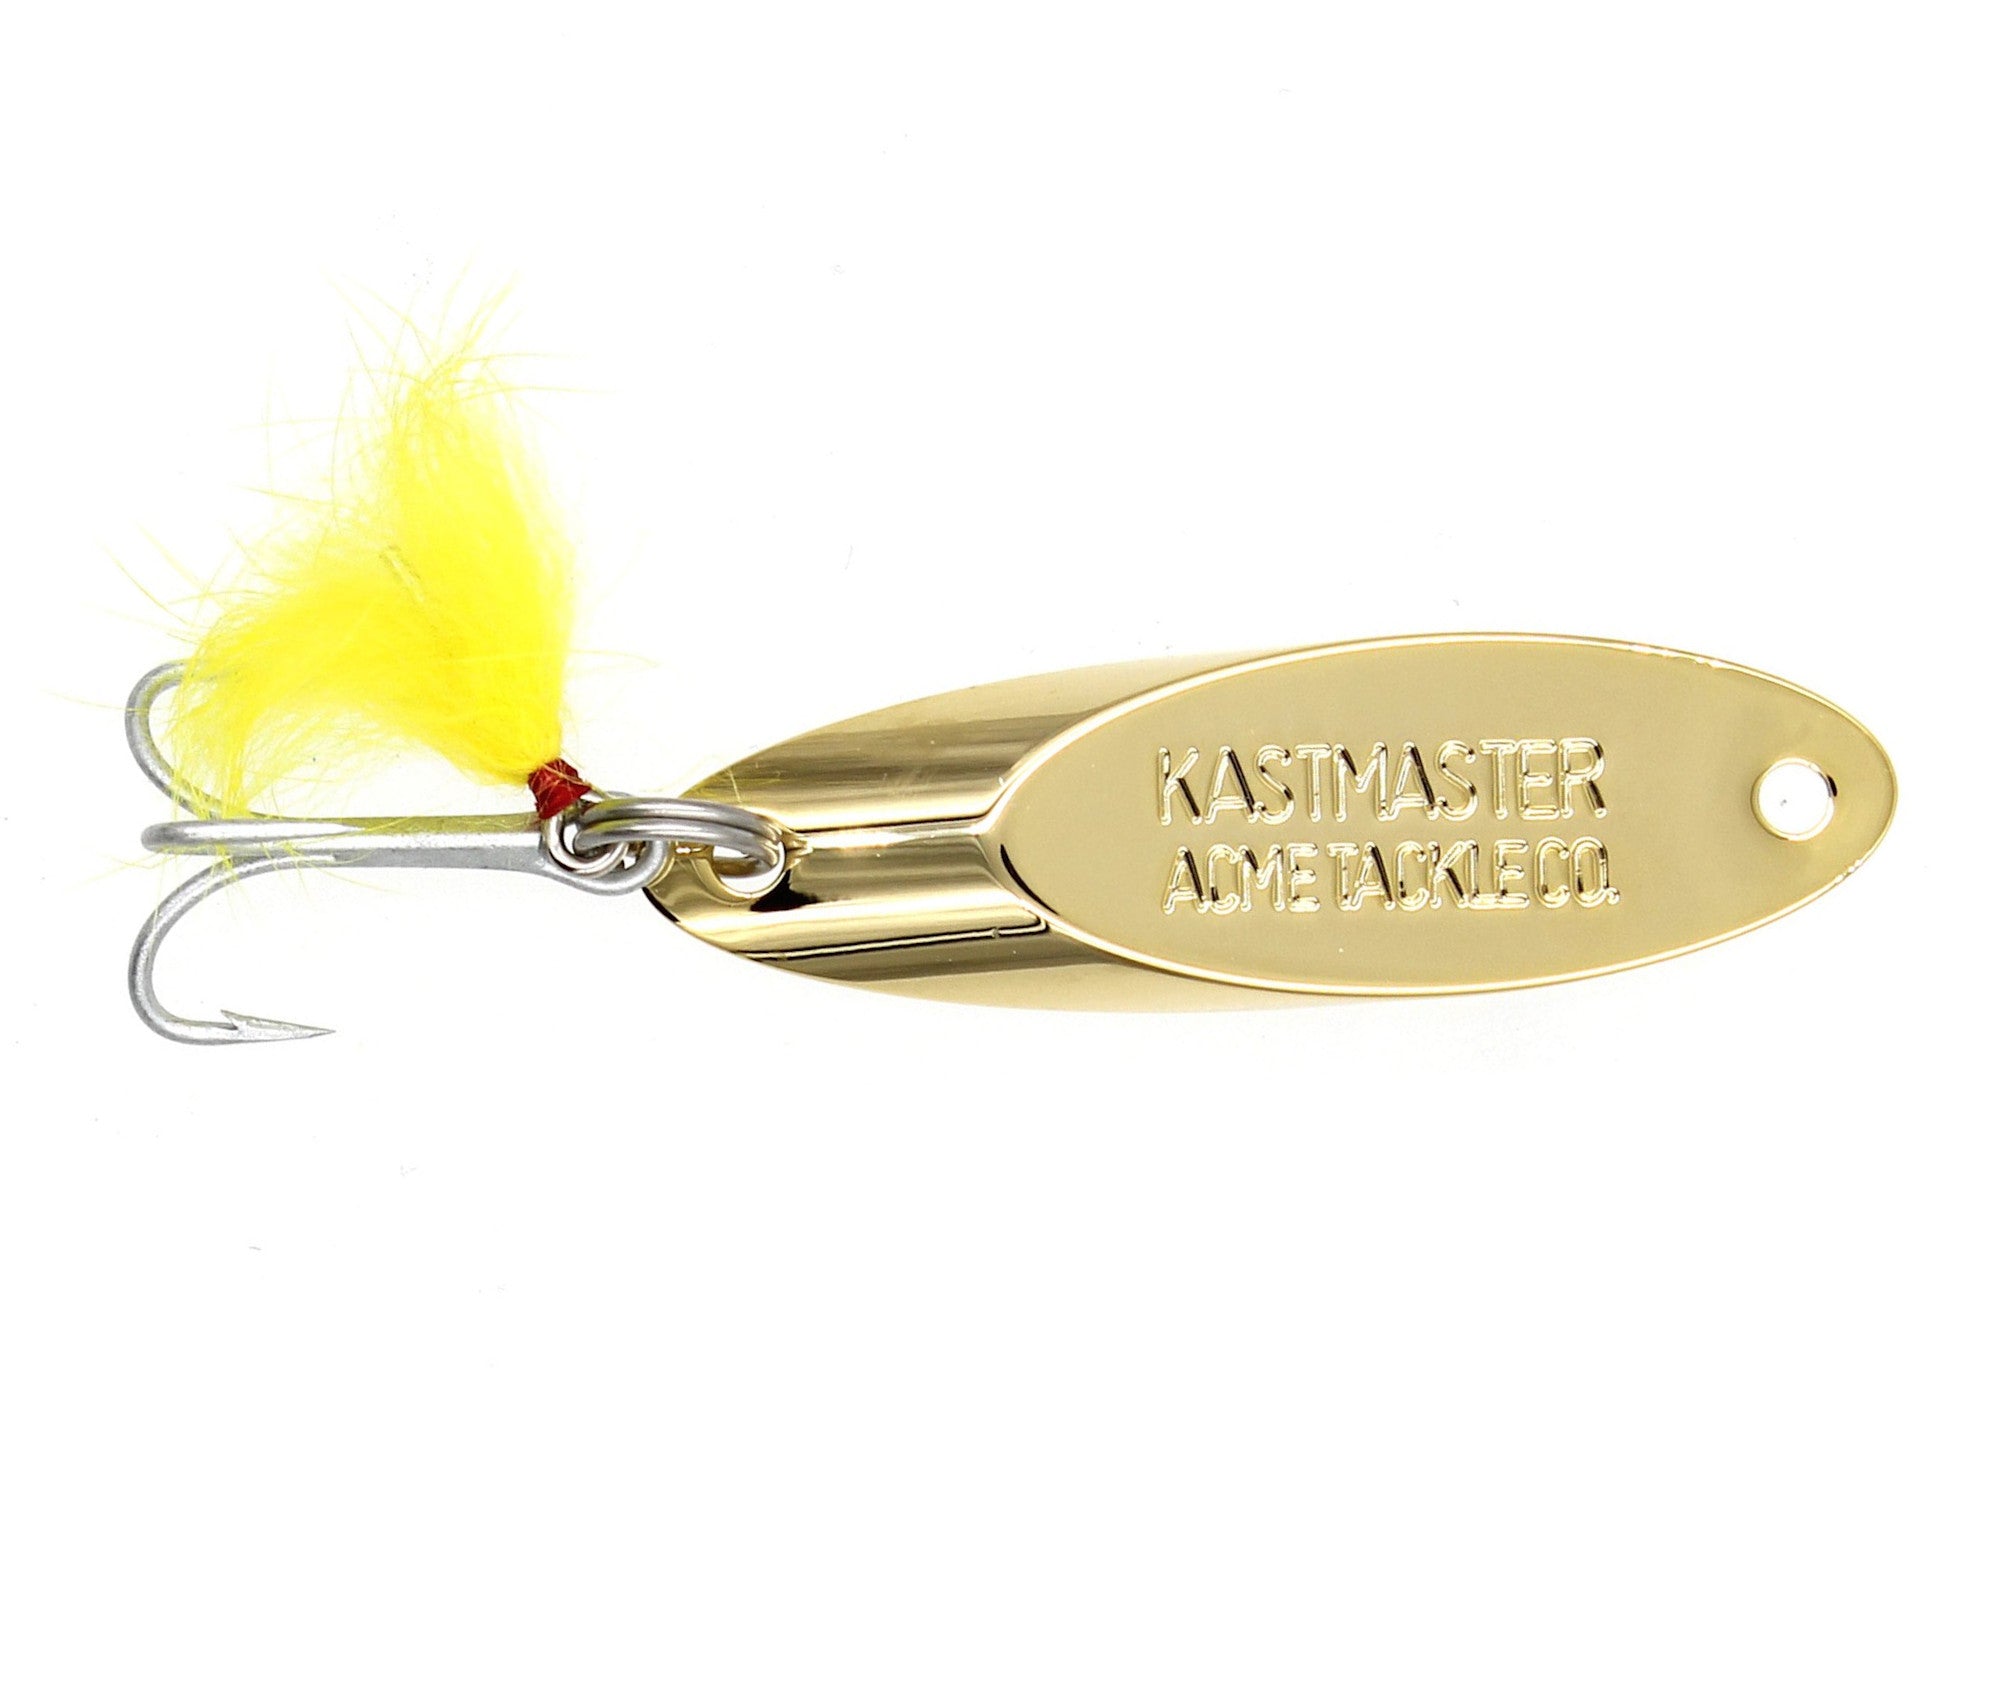 Acme Tackle Kastmaster Fishing Lure Spoon Metallic Perch 1/4 oz